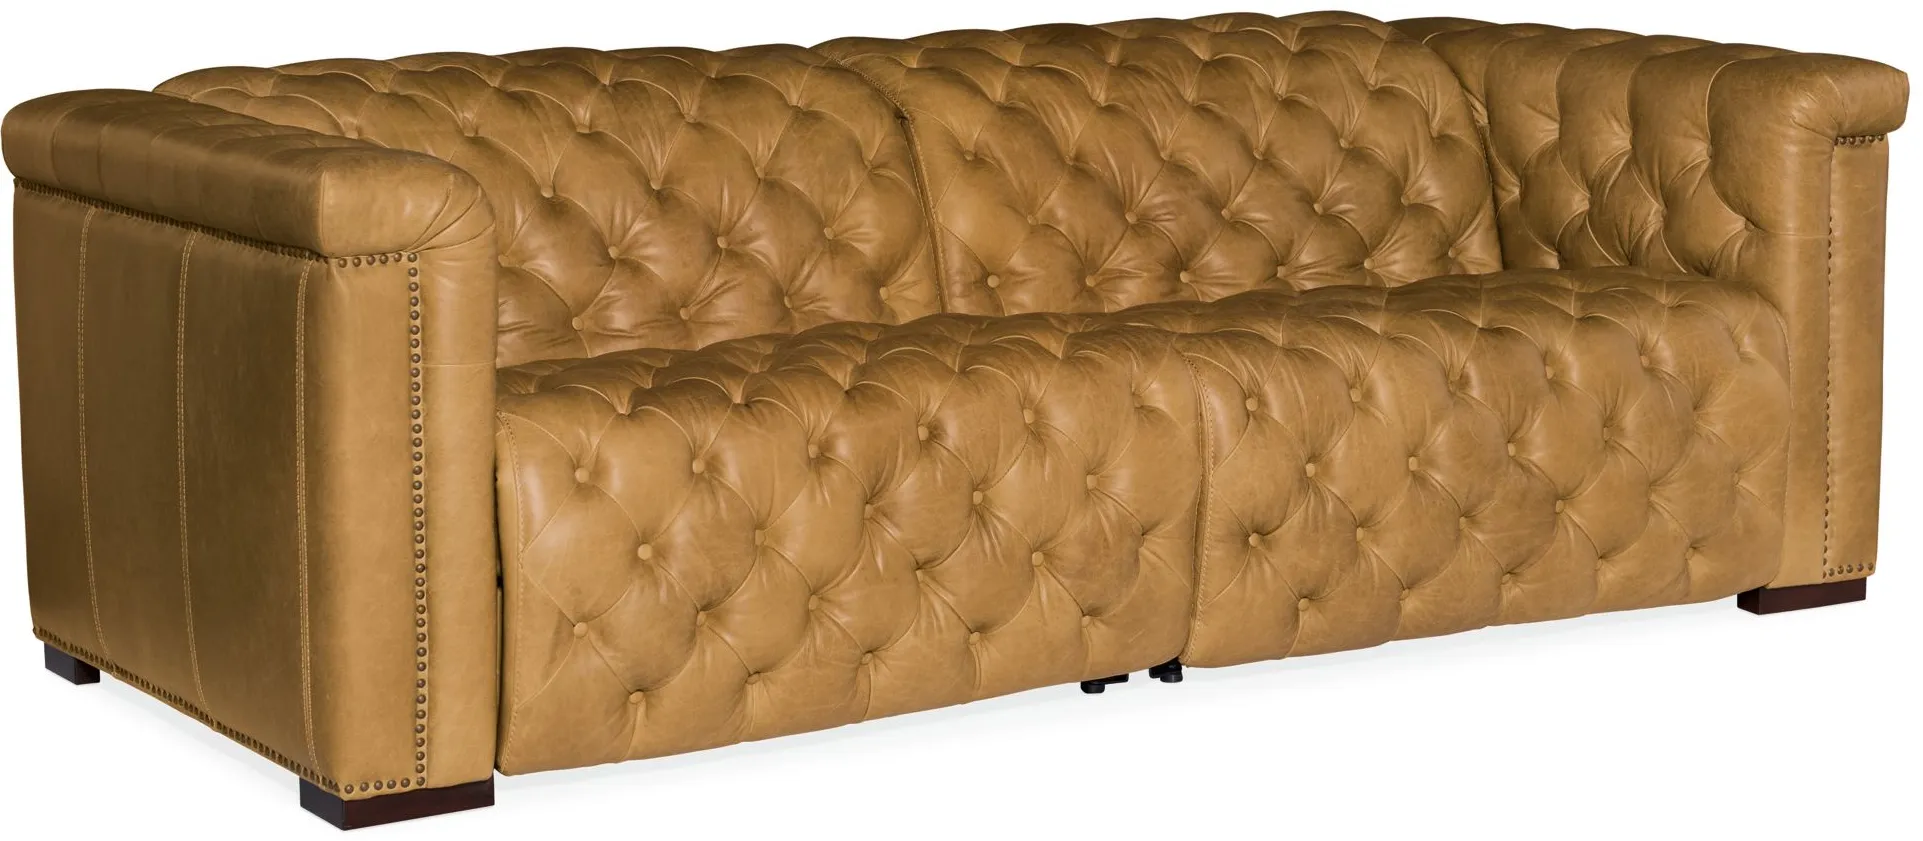 Savion Sofa in Brown by Hooker Furniture